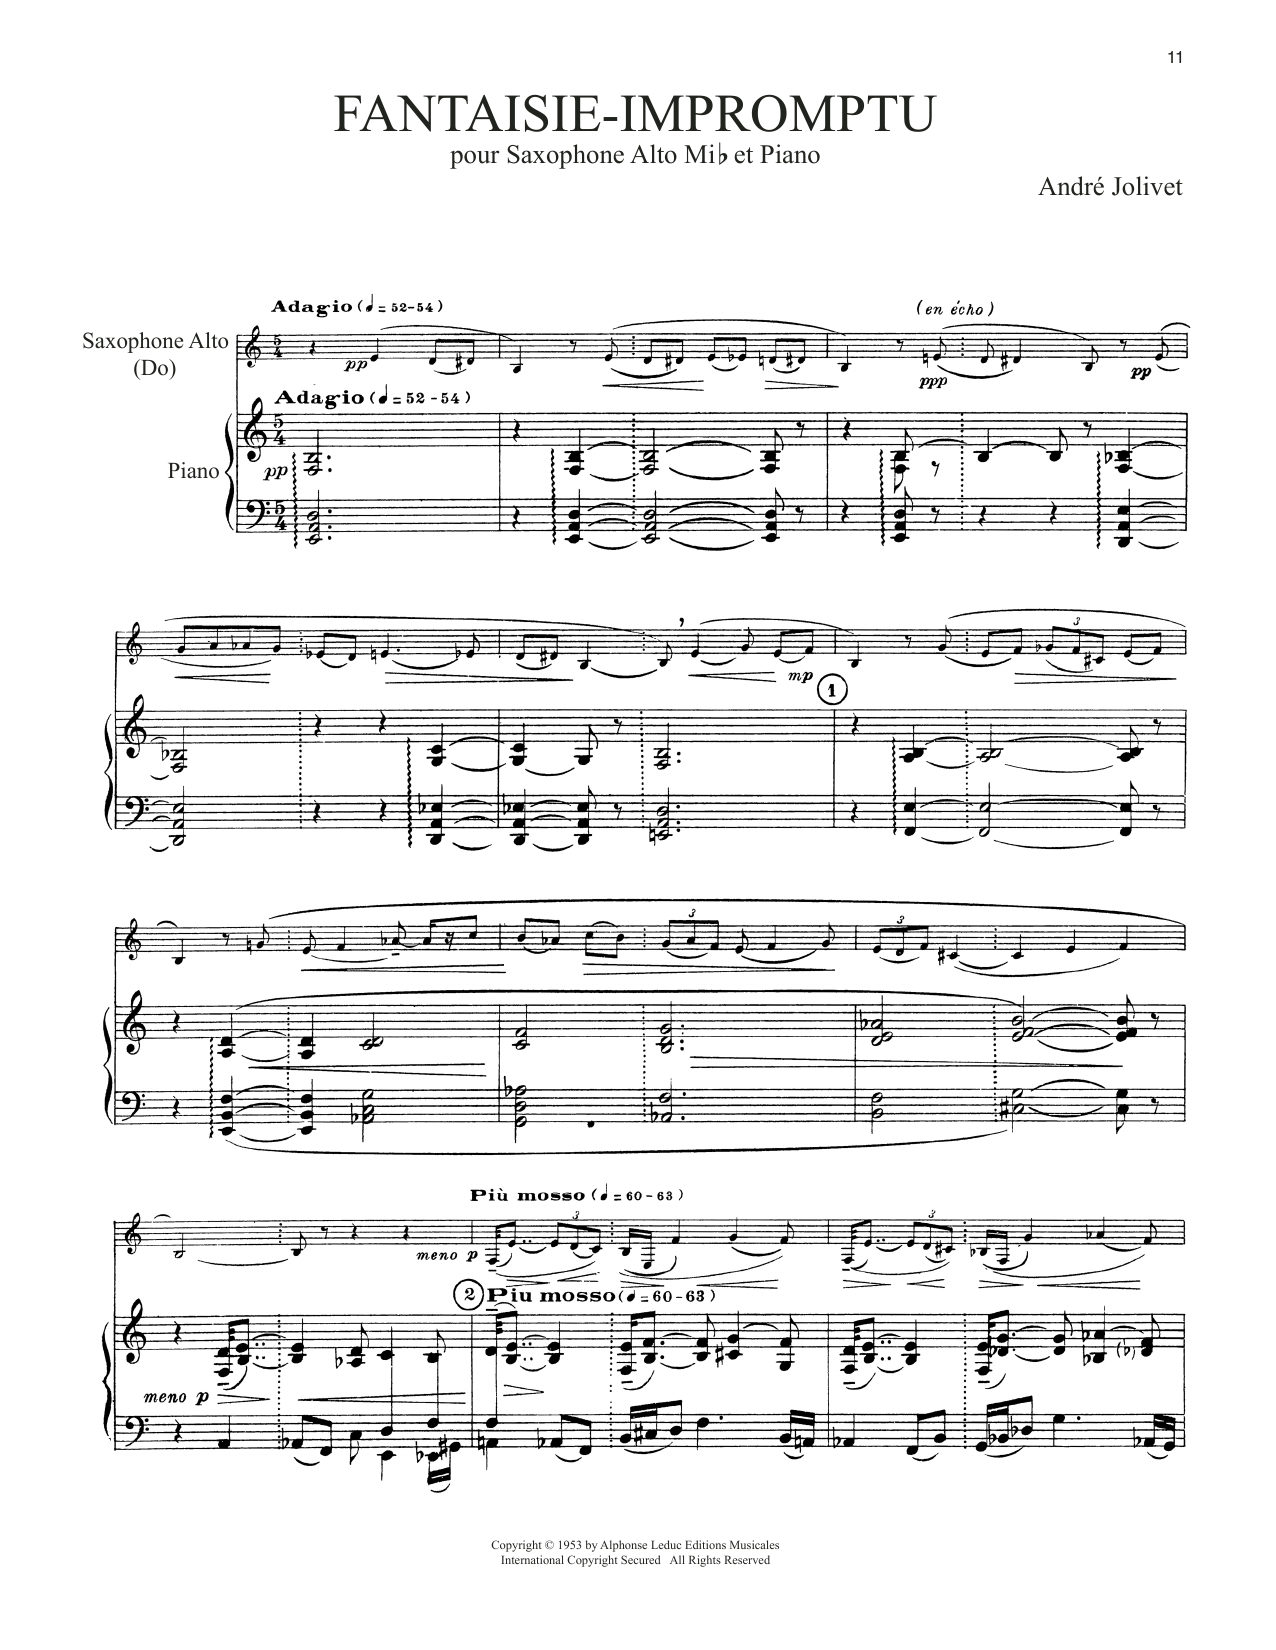 Andre Jolivet Fantaisie-Impromptu sheet music notes printable PDF score